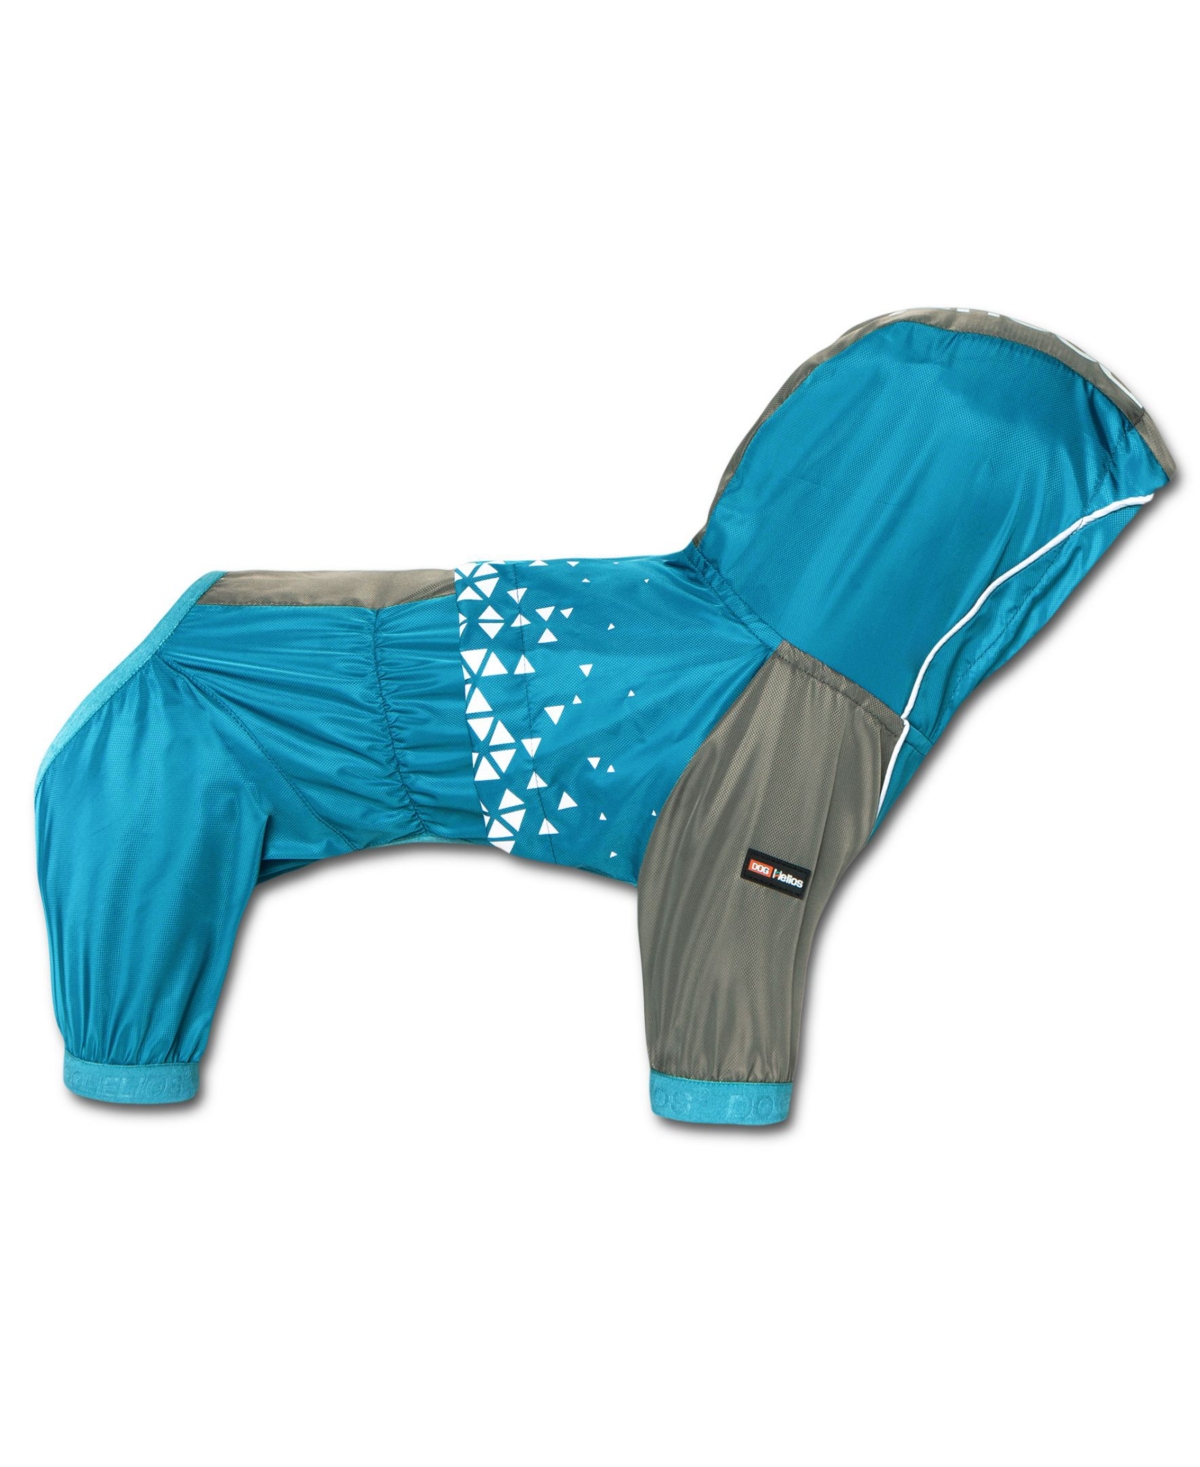 'Vortex' Full Bodied Water-resistant Windbreaker Dog Jacket - Blue